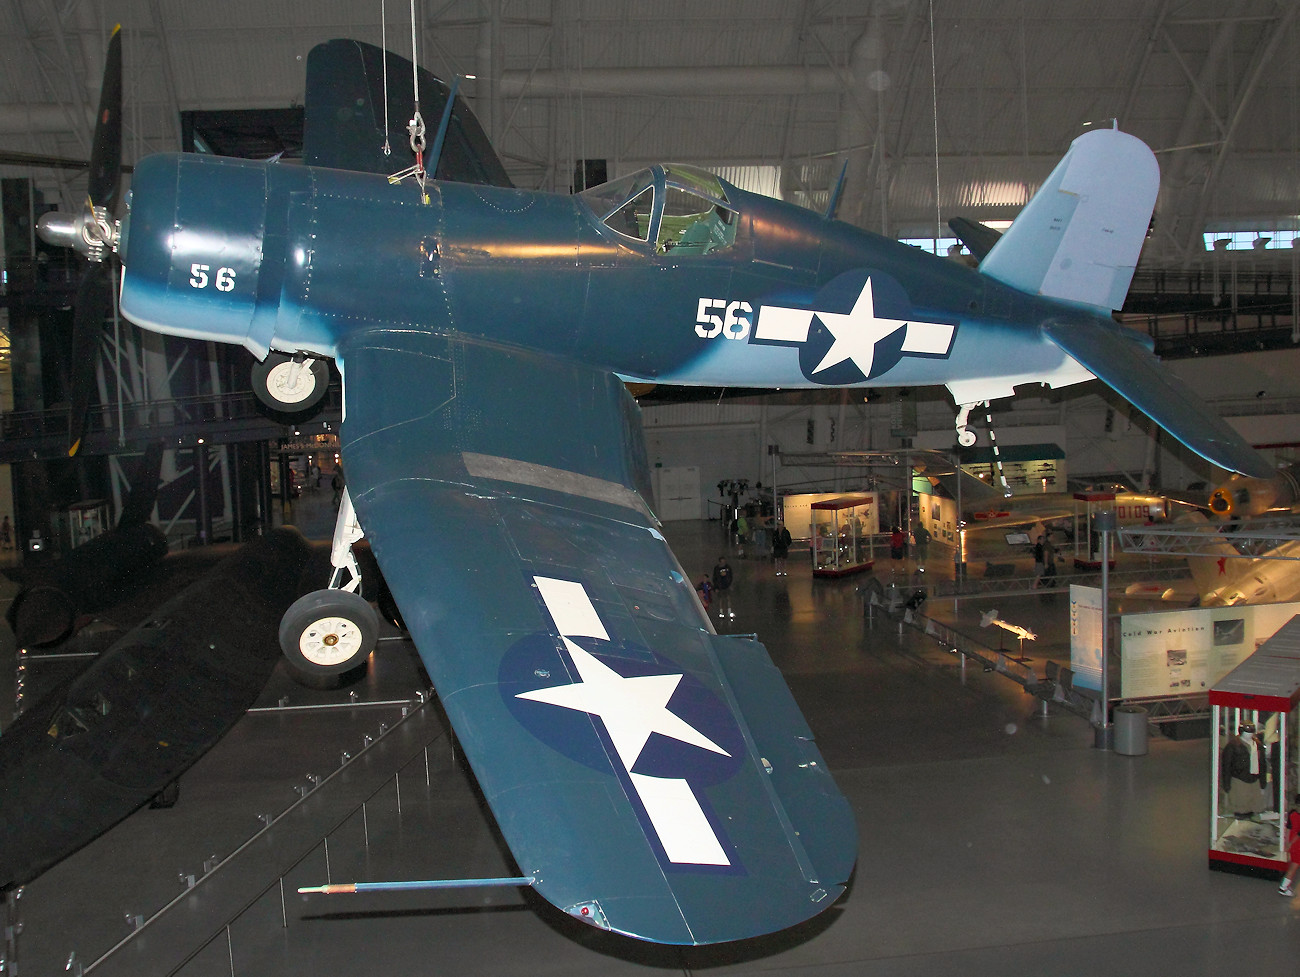 Vought F4U-1D Corsair - trägergestütztes Jagdflugzeug der USA im Zweiten Weltkrieg